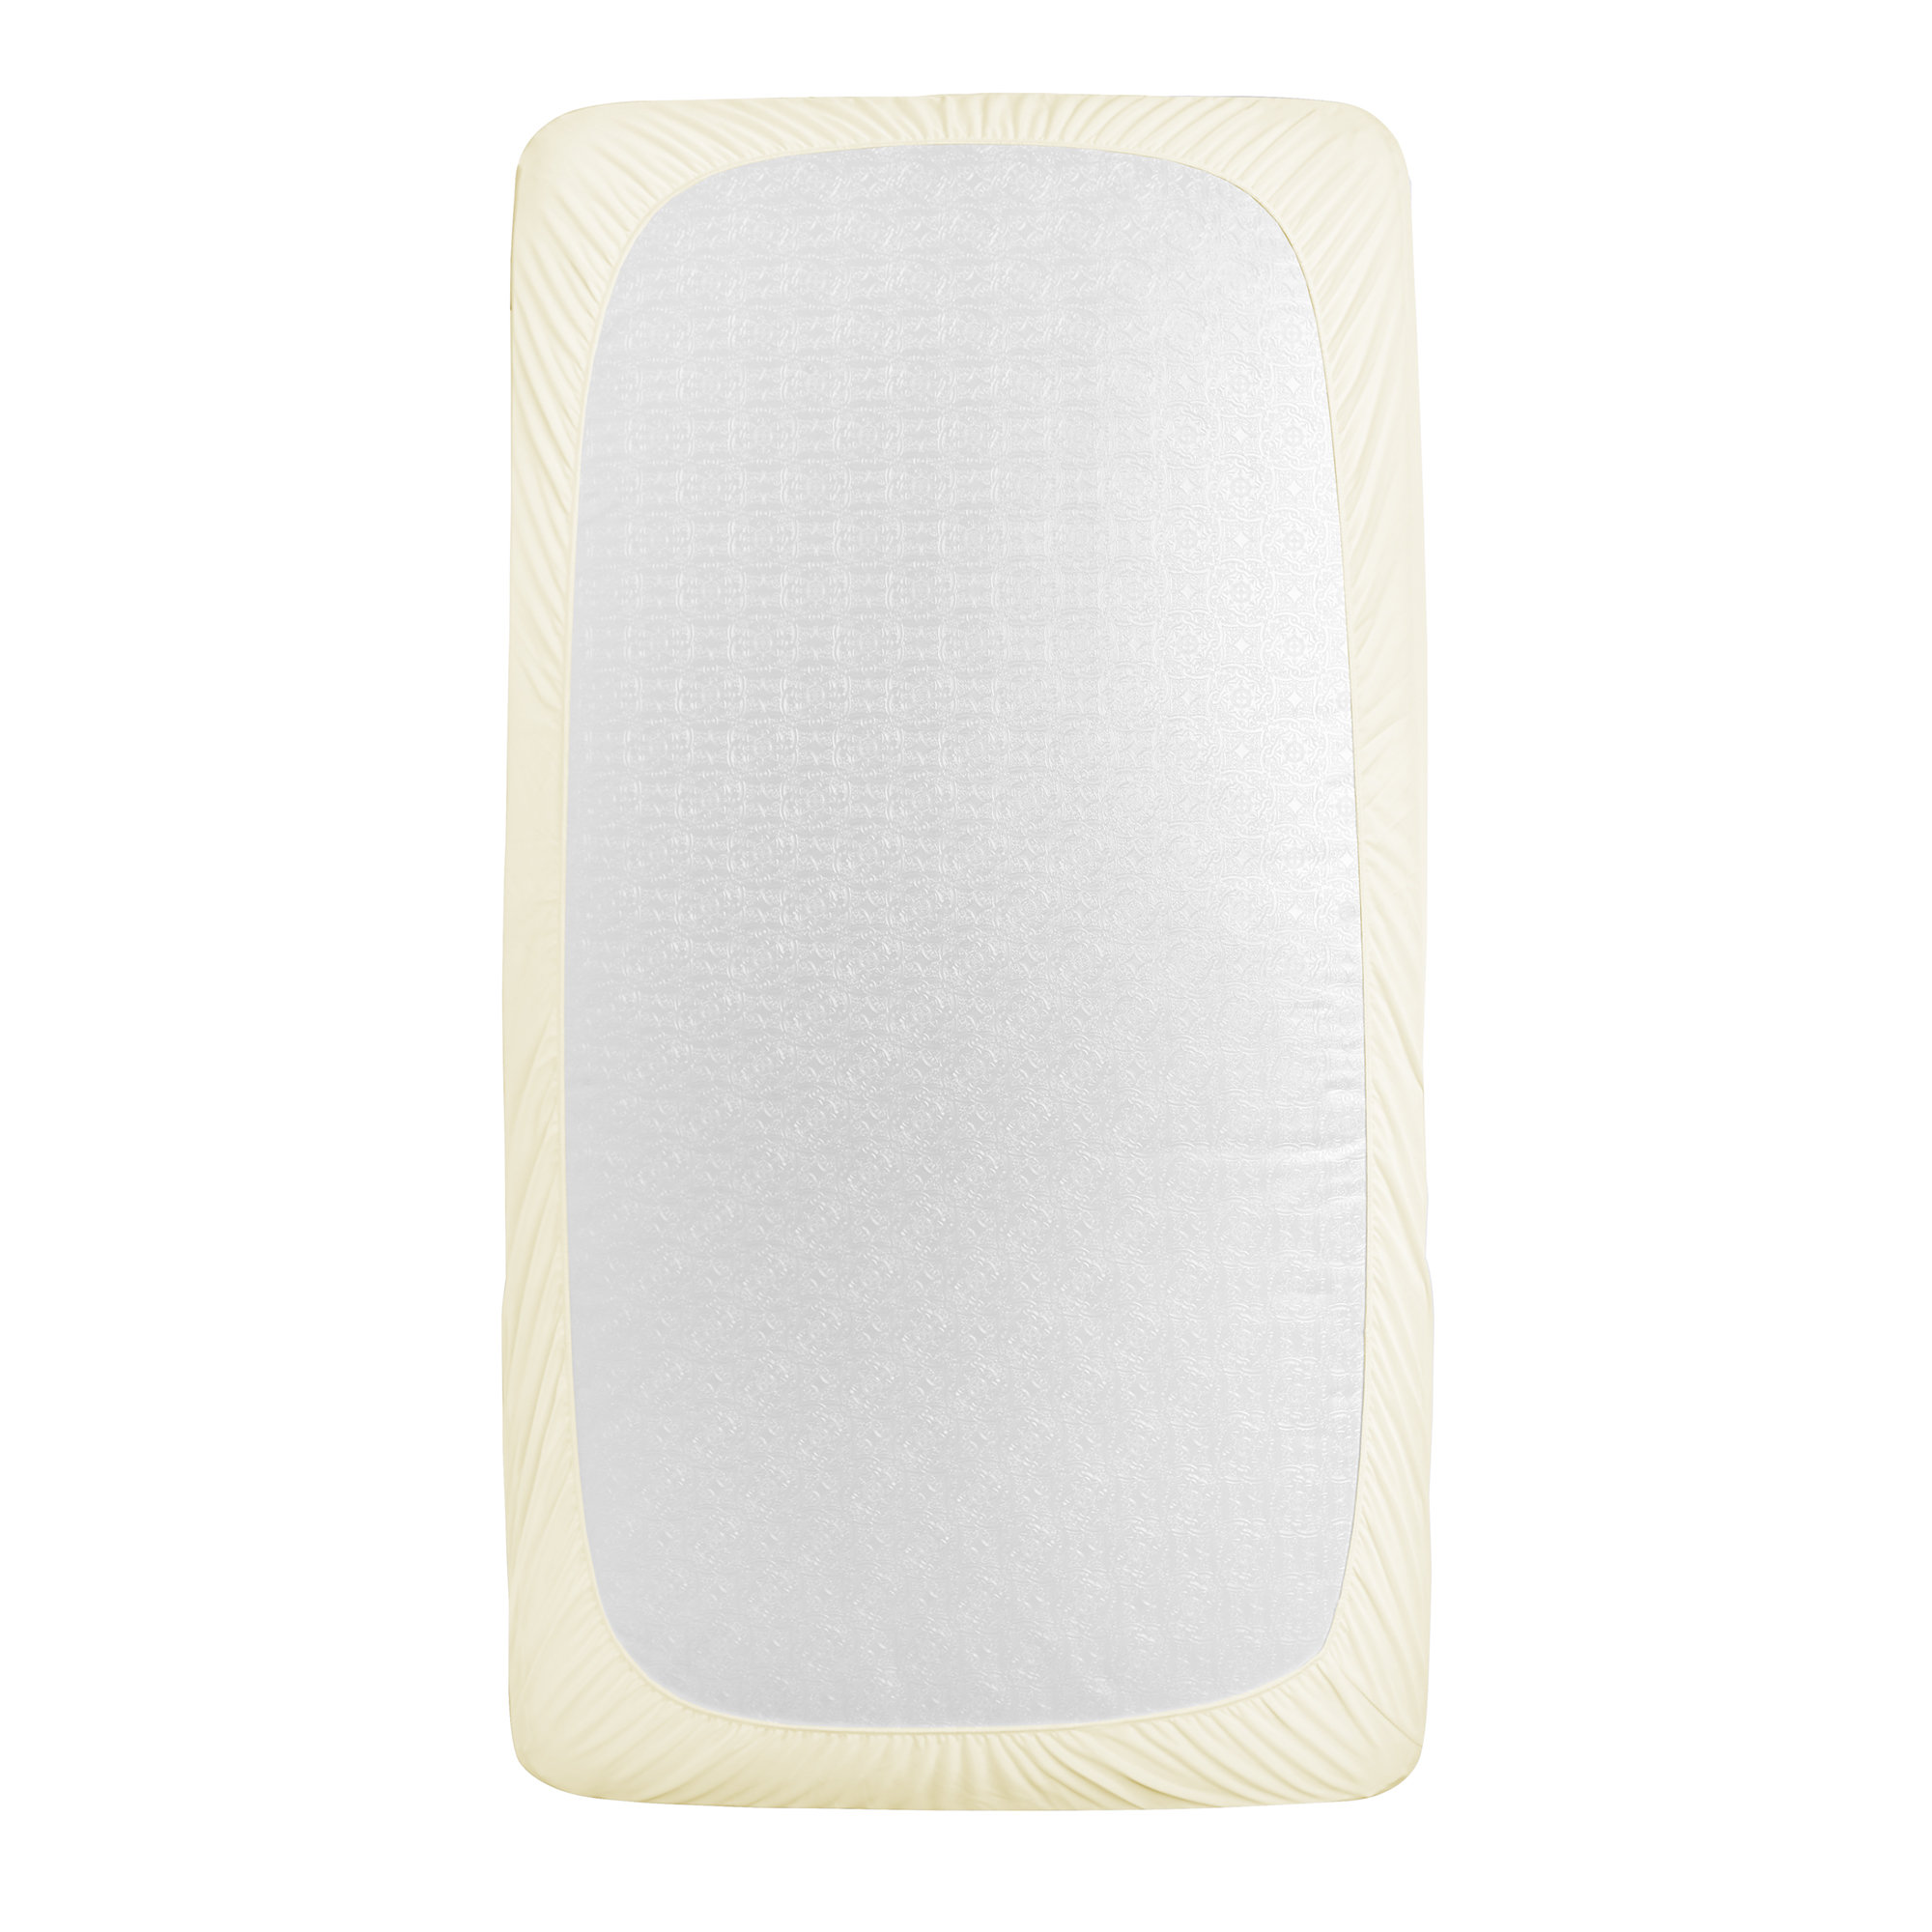 Waterproof & Breathable Crib Mattress Pad